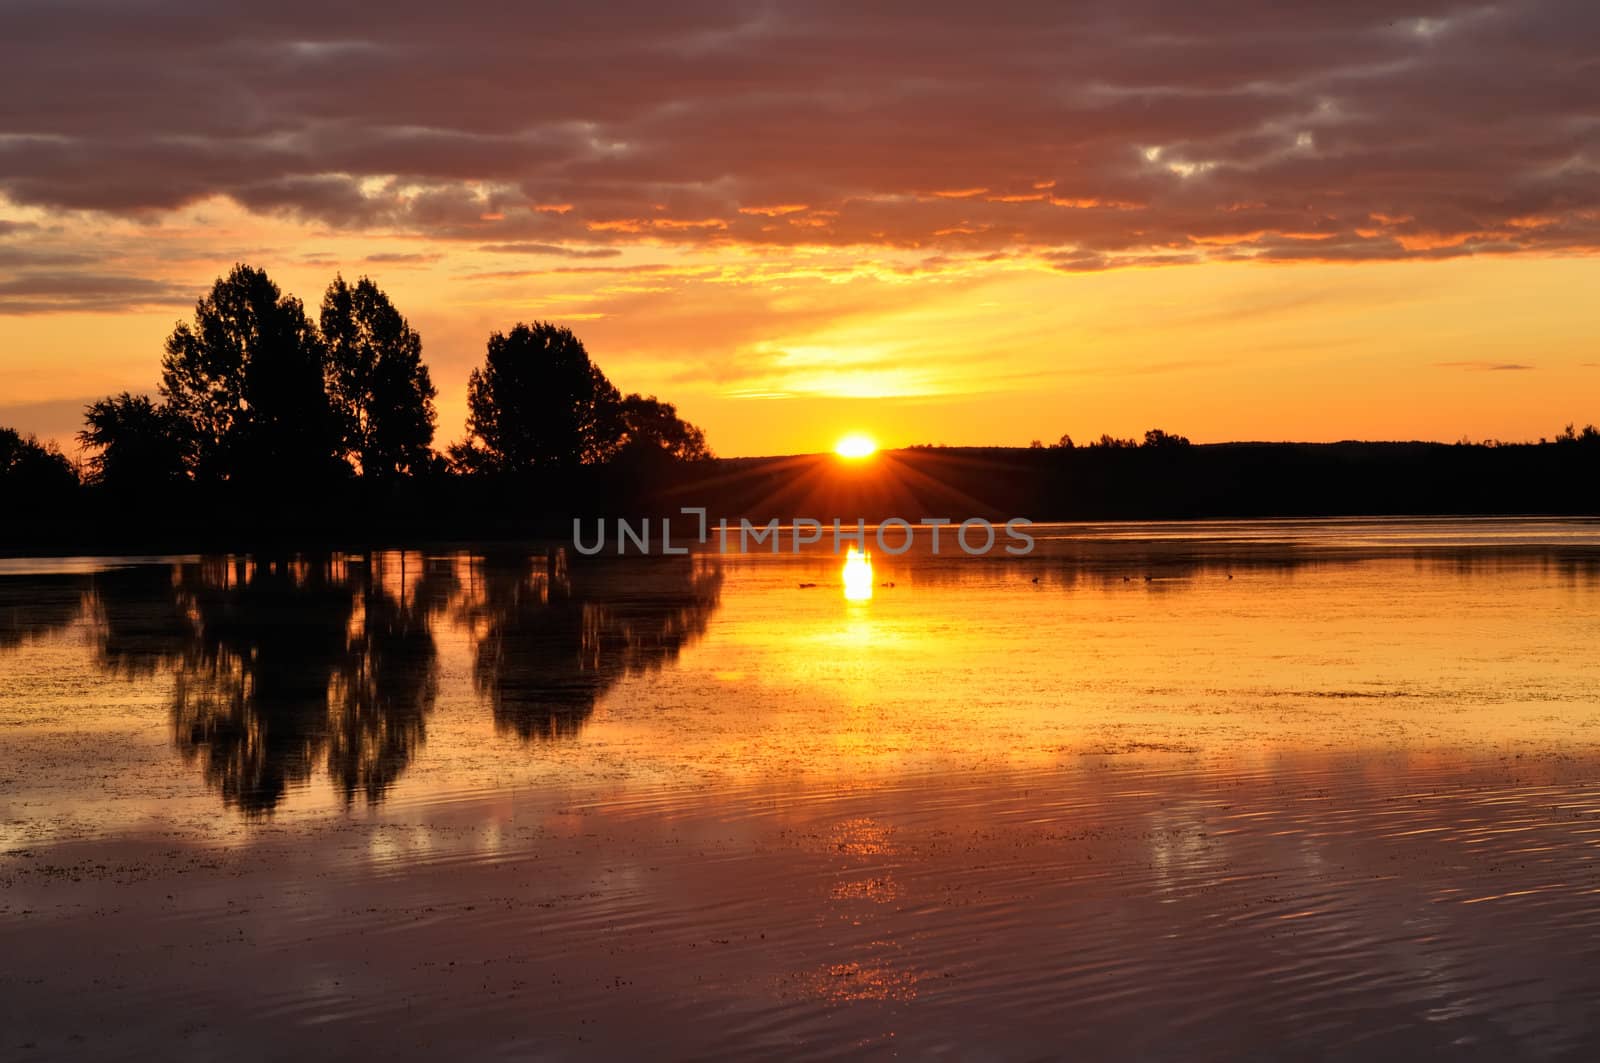 Sunrise on a lake by Hbak